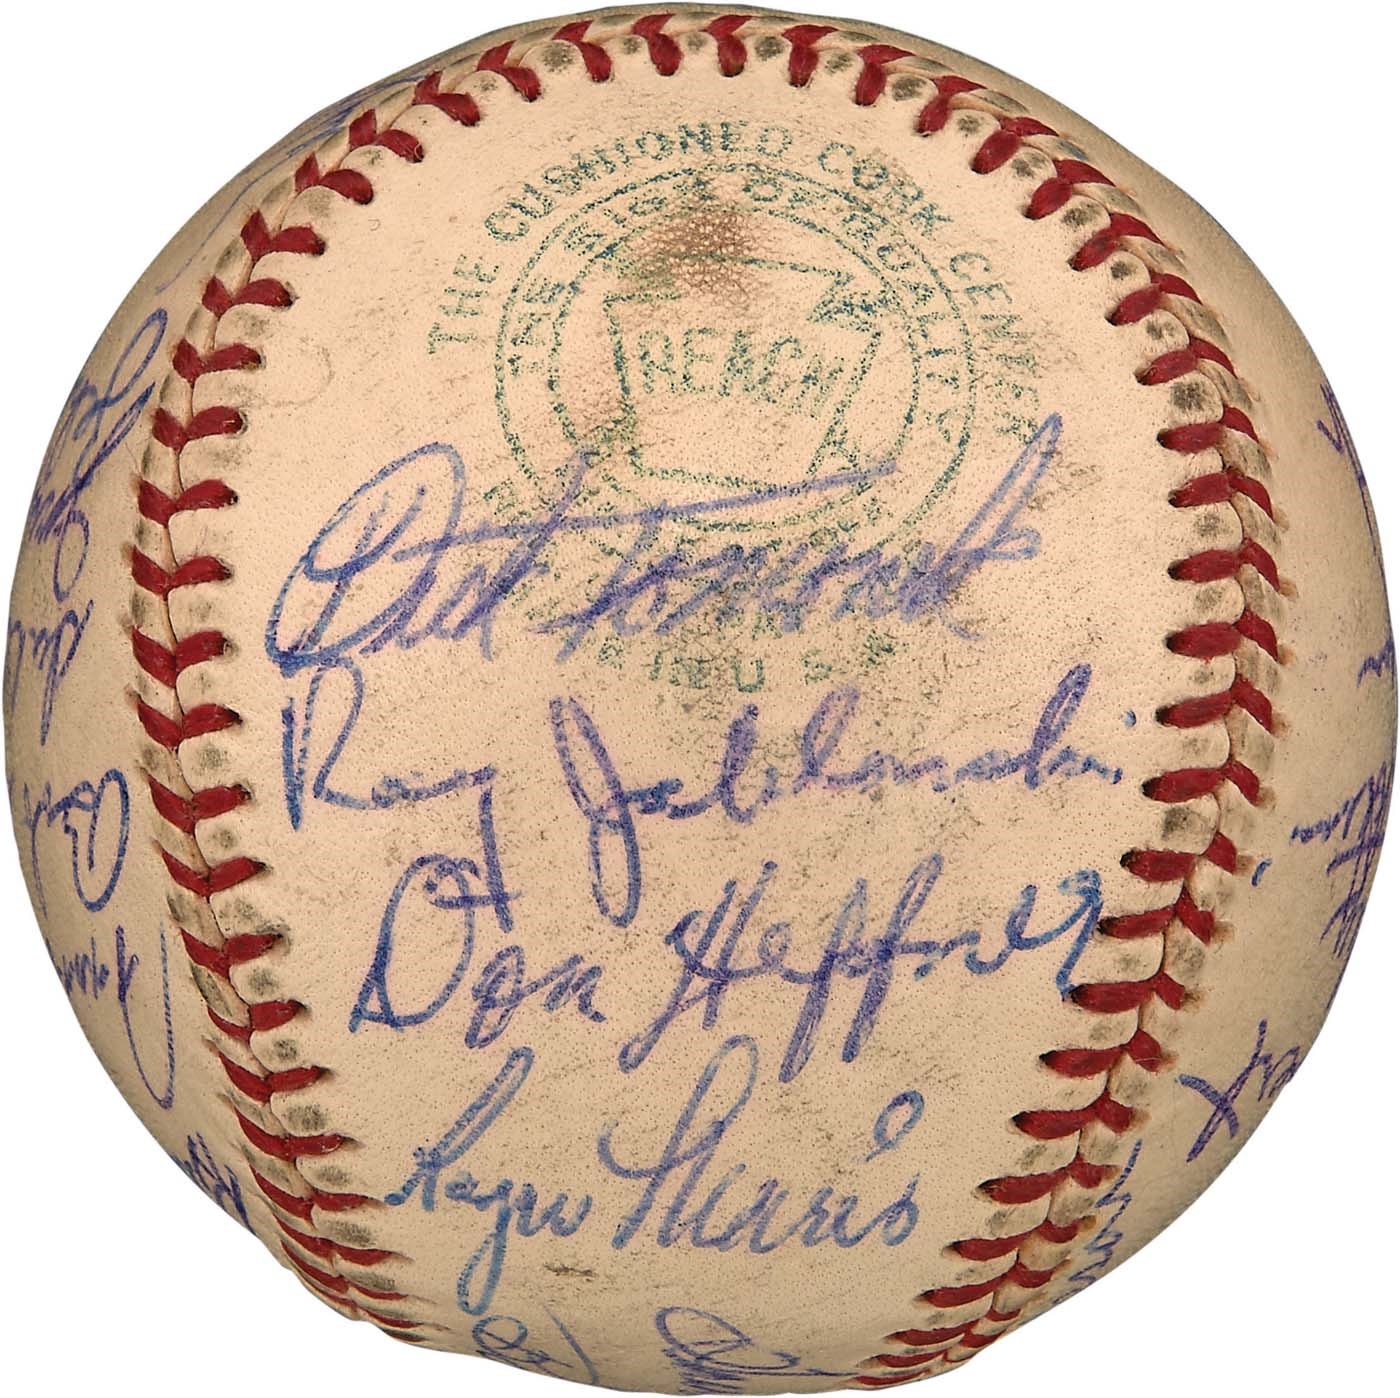 - 1959 Kansas City Athletics Team-Signed Baseball with Roger Maris - No Clubhouse (PSA)